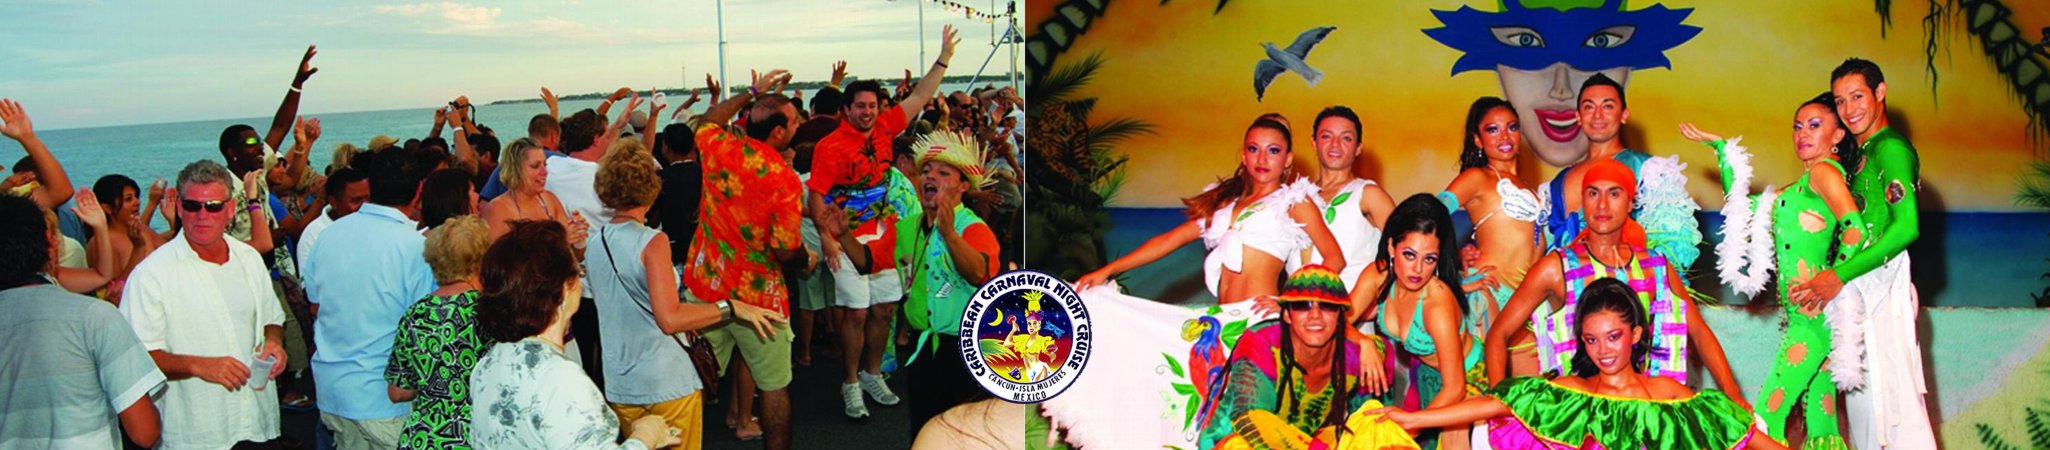 Fiesta en Cancun rumbo a Isla Mujeres: Caribbean Carnaval